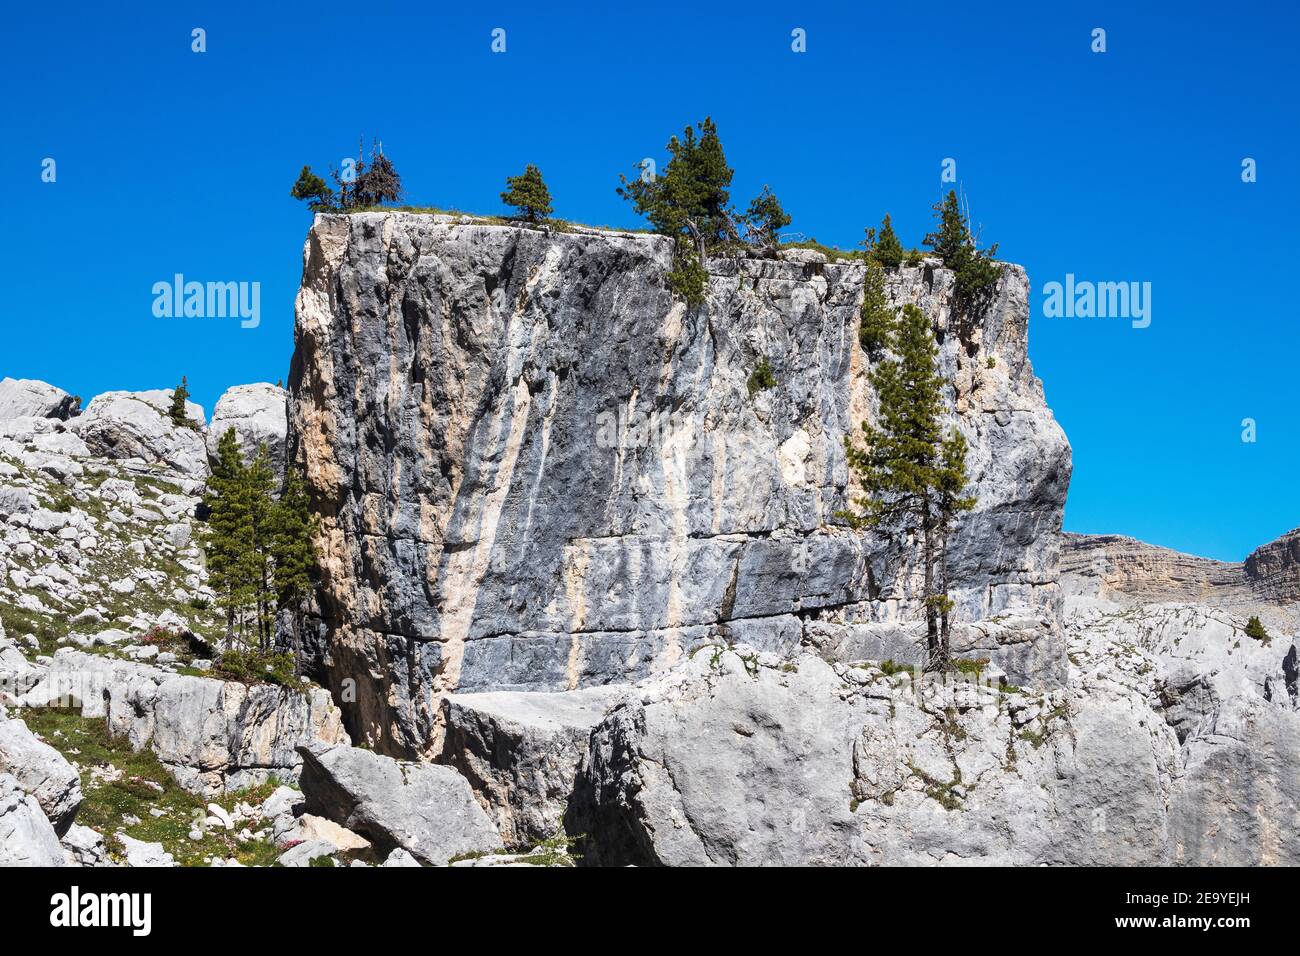 Rocks and Pinus cembra trees. Fanes valley. Italian Alps. Europe. Stock Photo